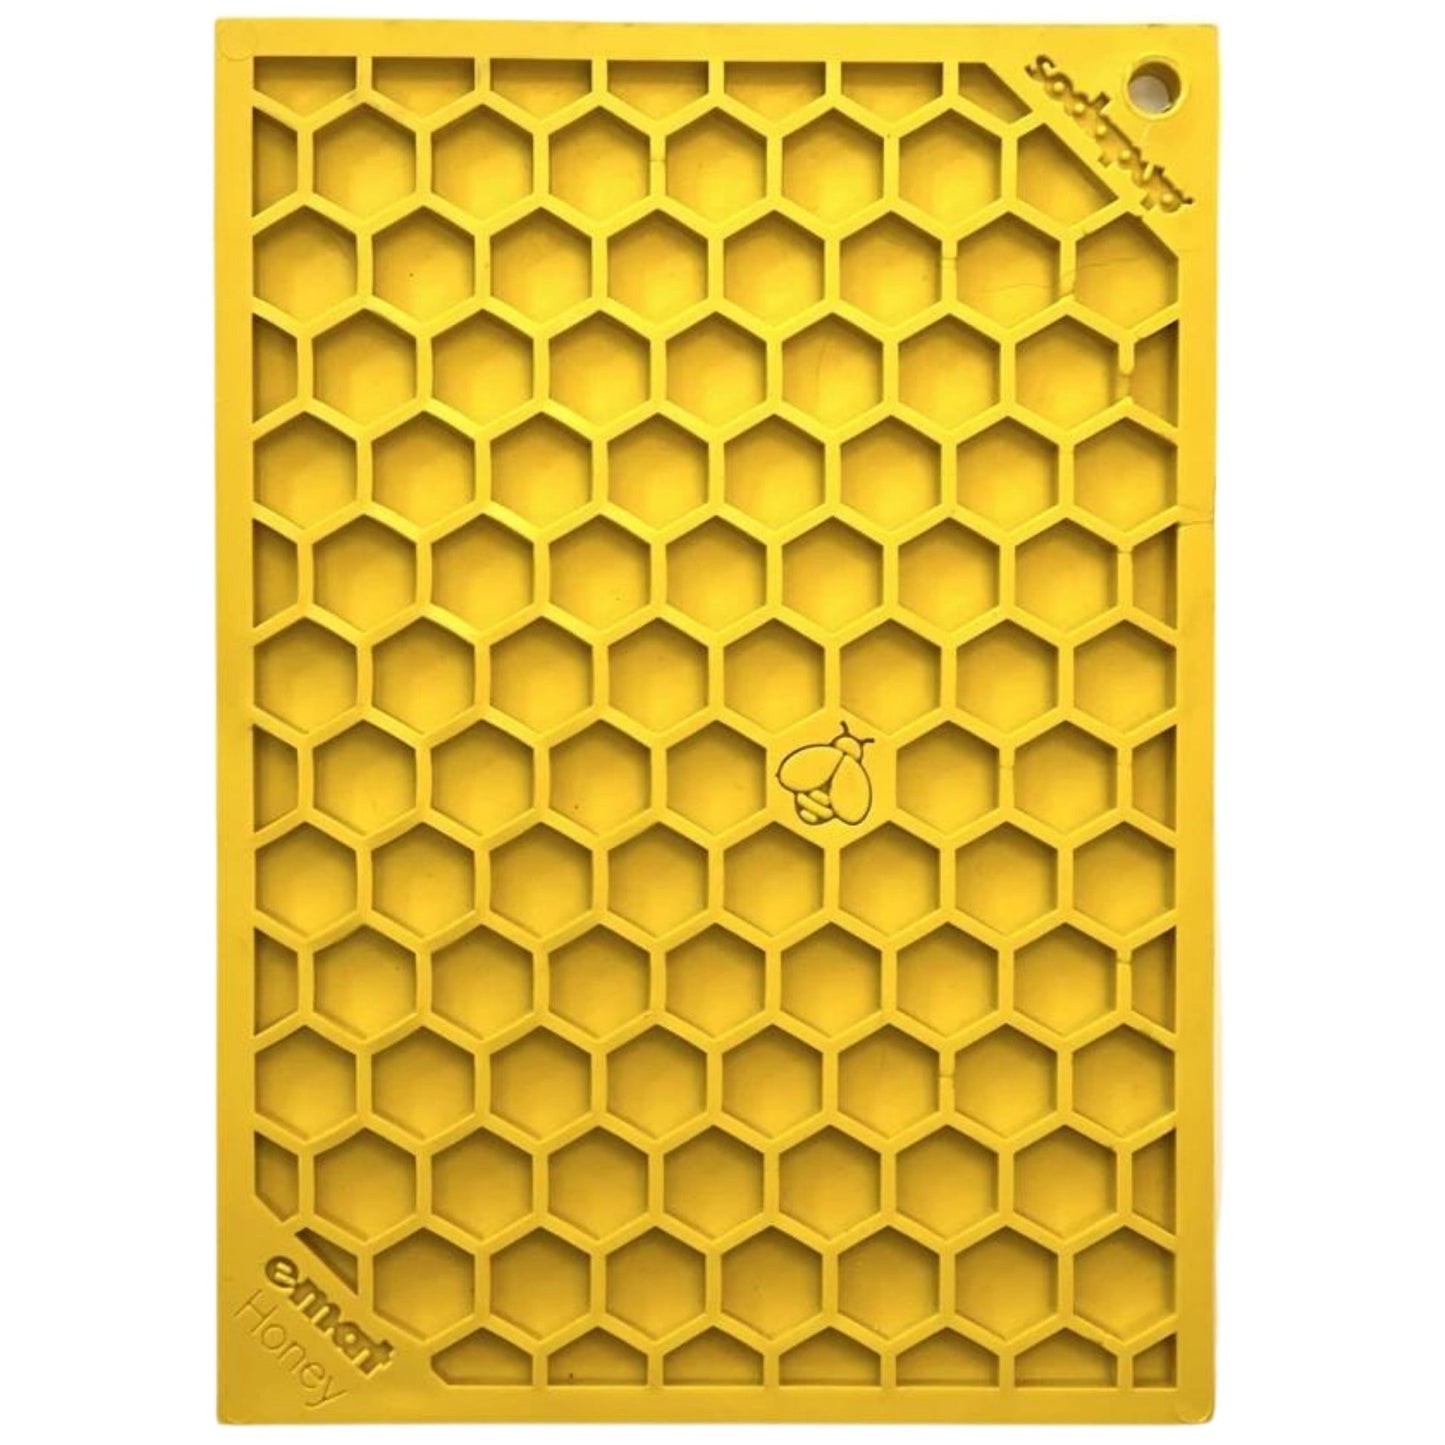 Sodapup Honeycomb Emat & Lick Mat (more sizes)